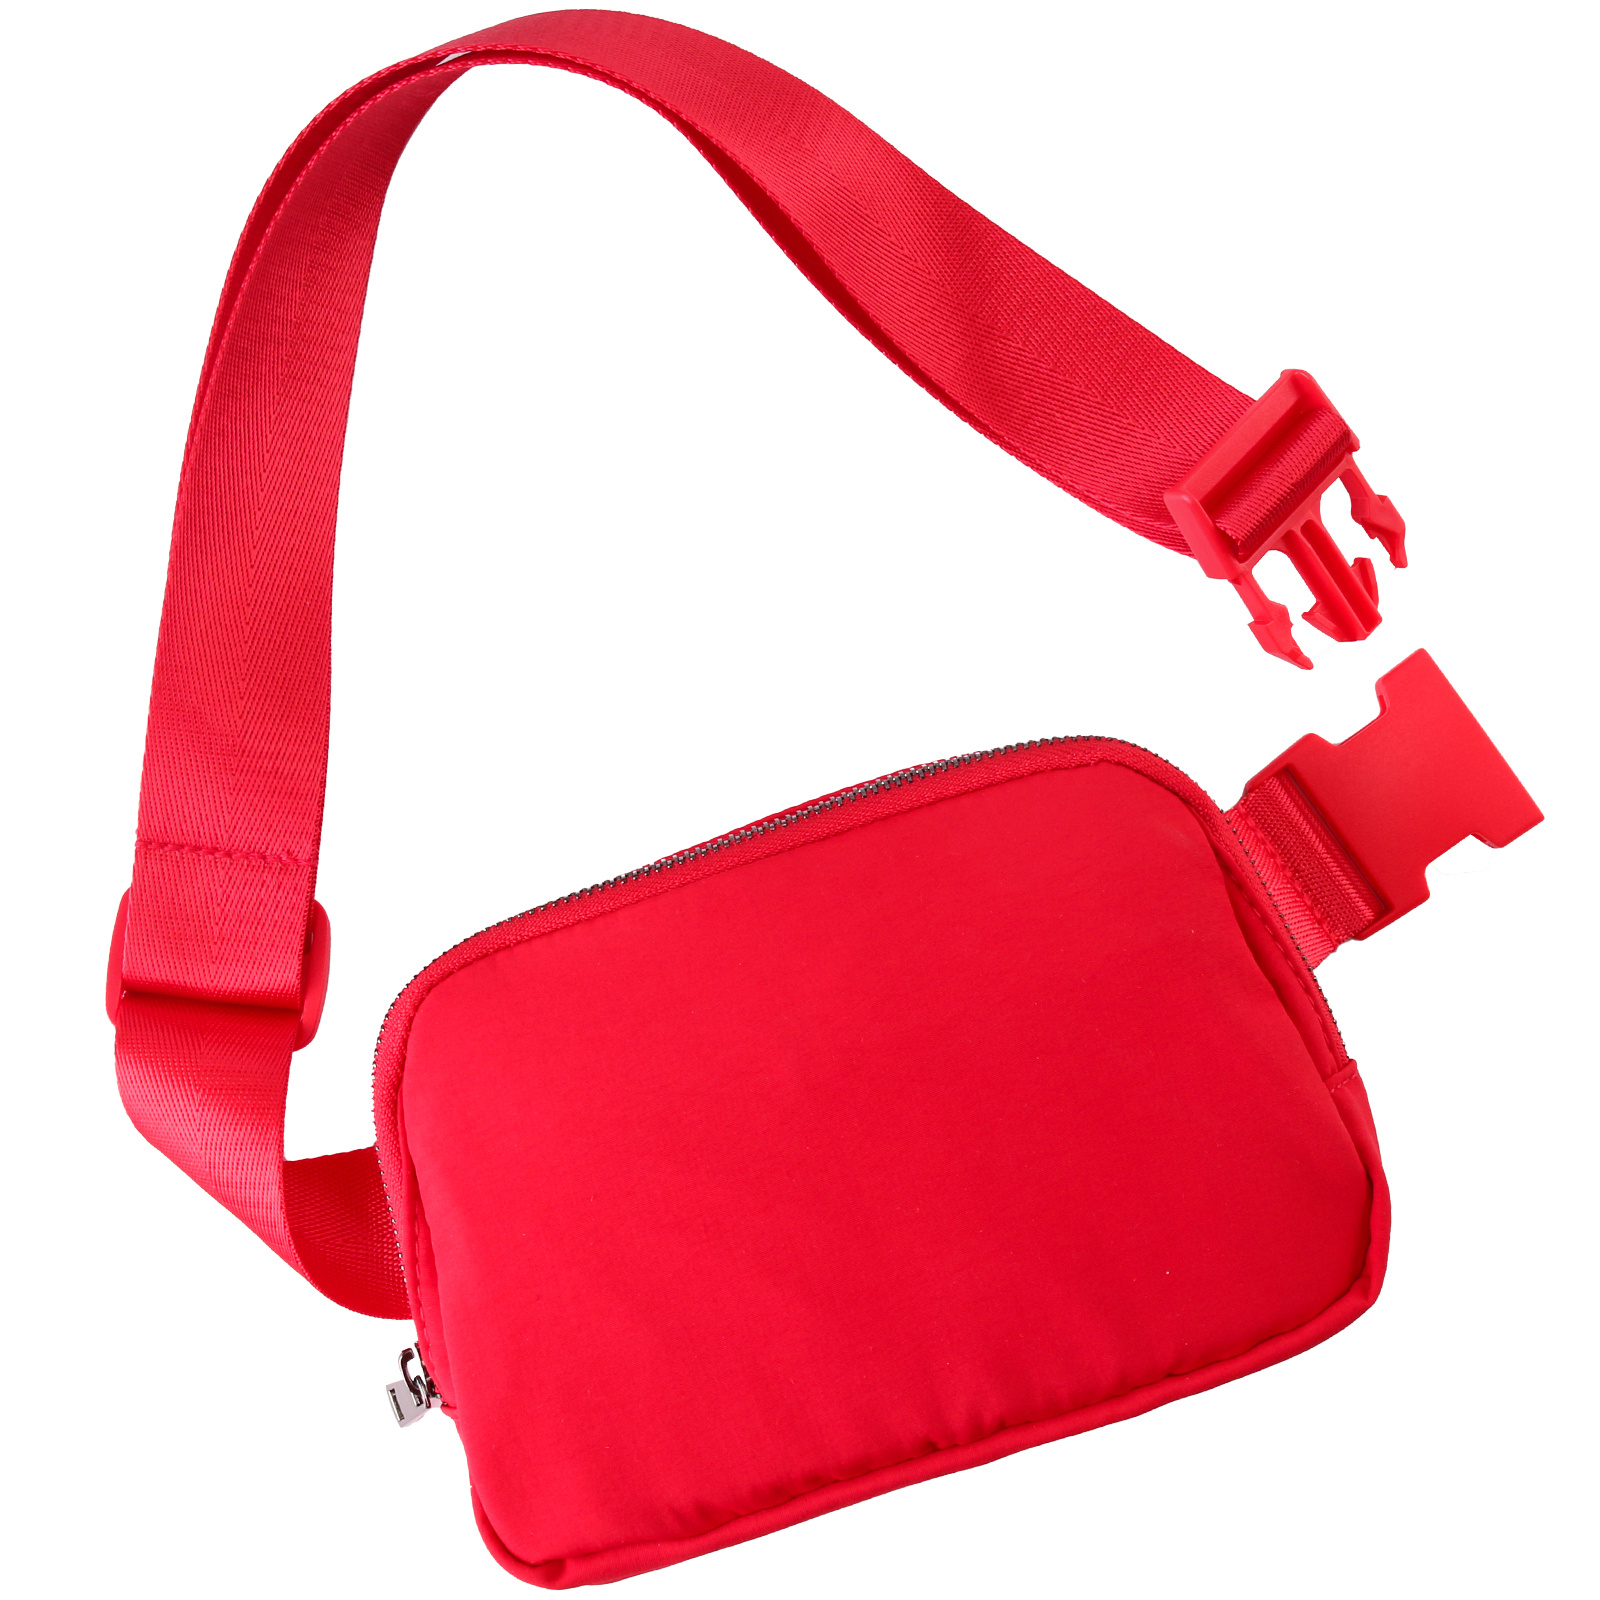 Lululemon Accessory Bags $29 Shipped (Crossbody, Belt Bags)